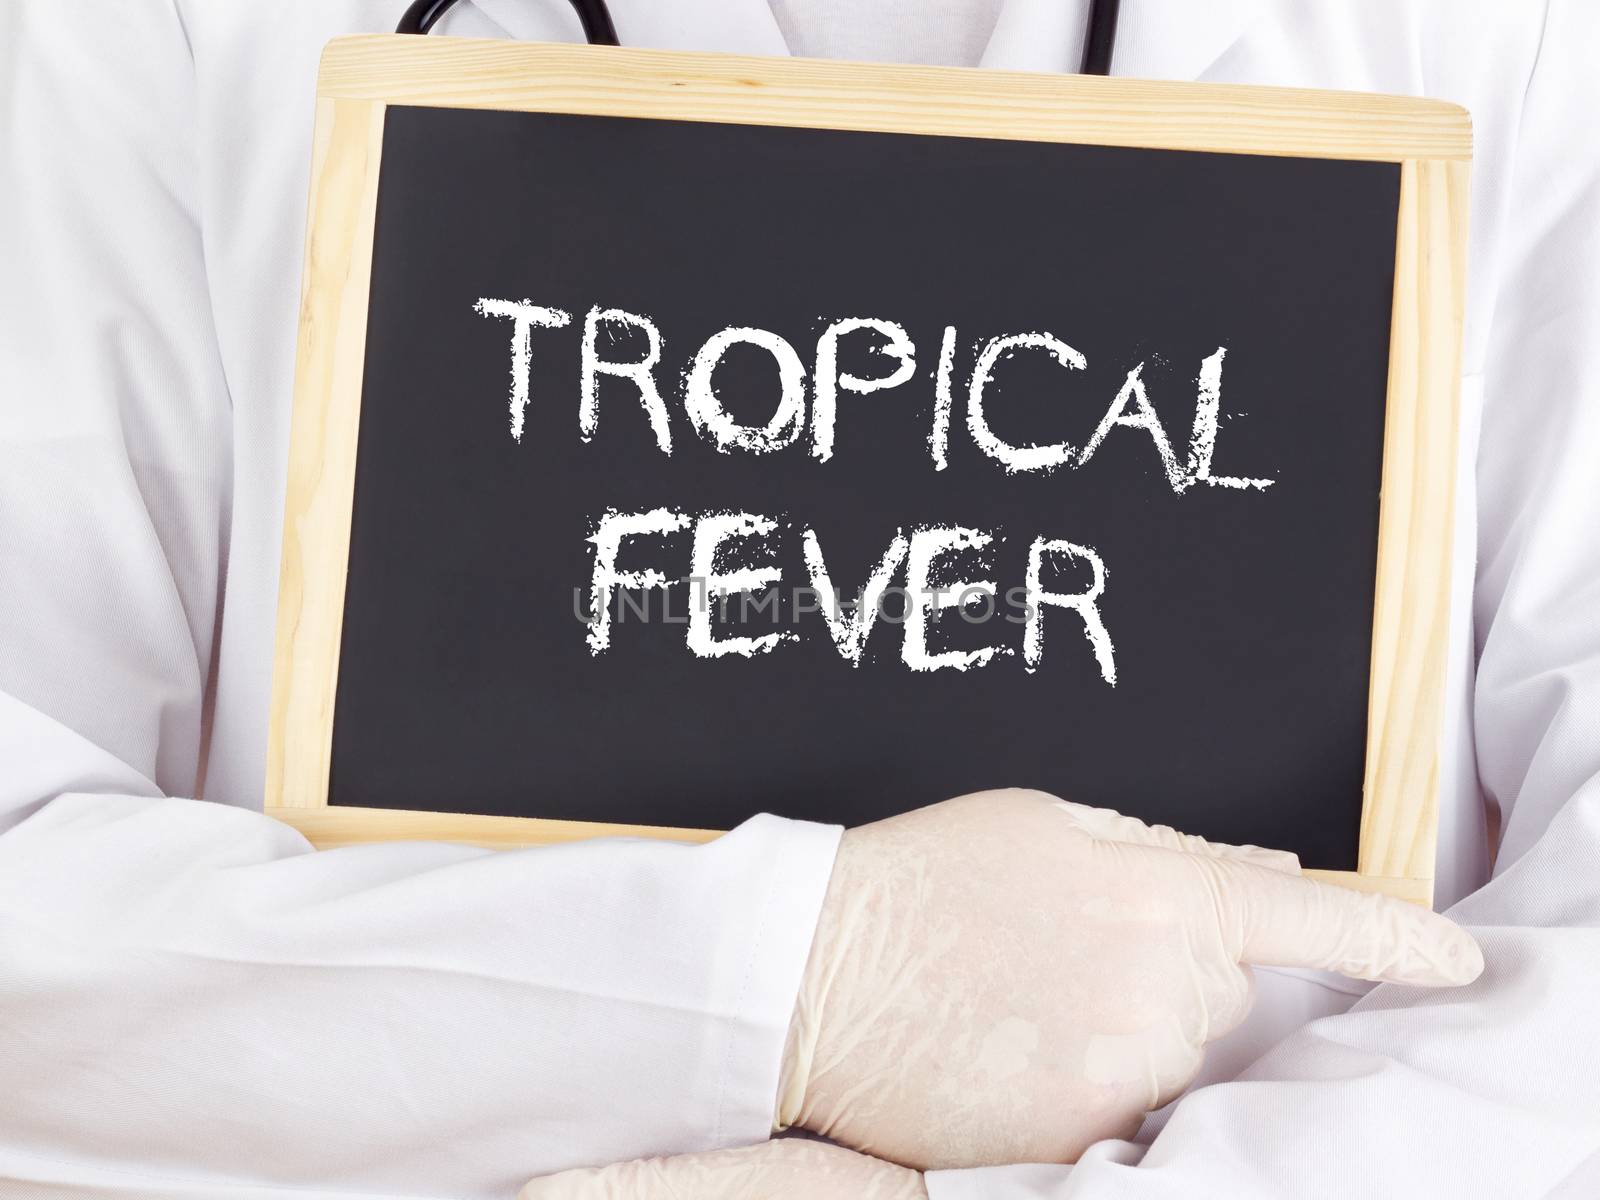 Doctor shows information on blackboard: Tropical fever